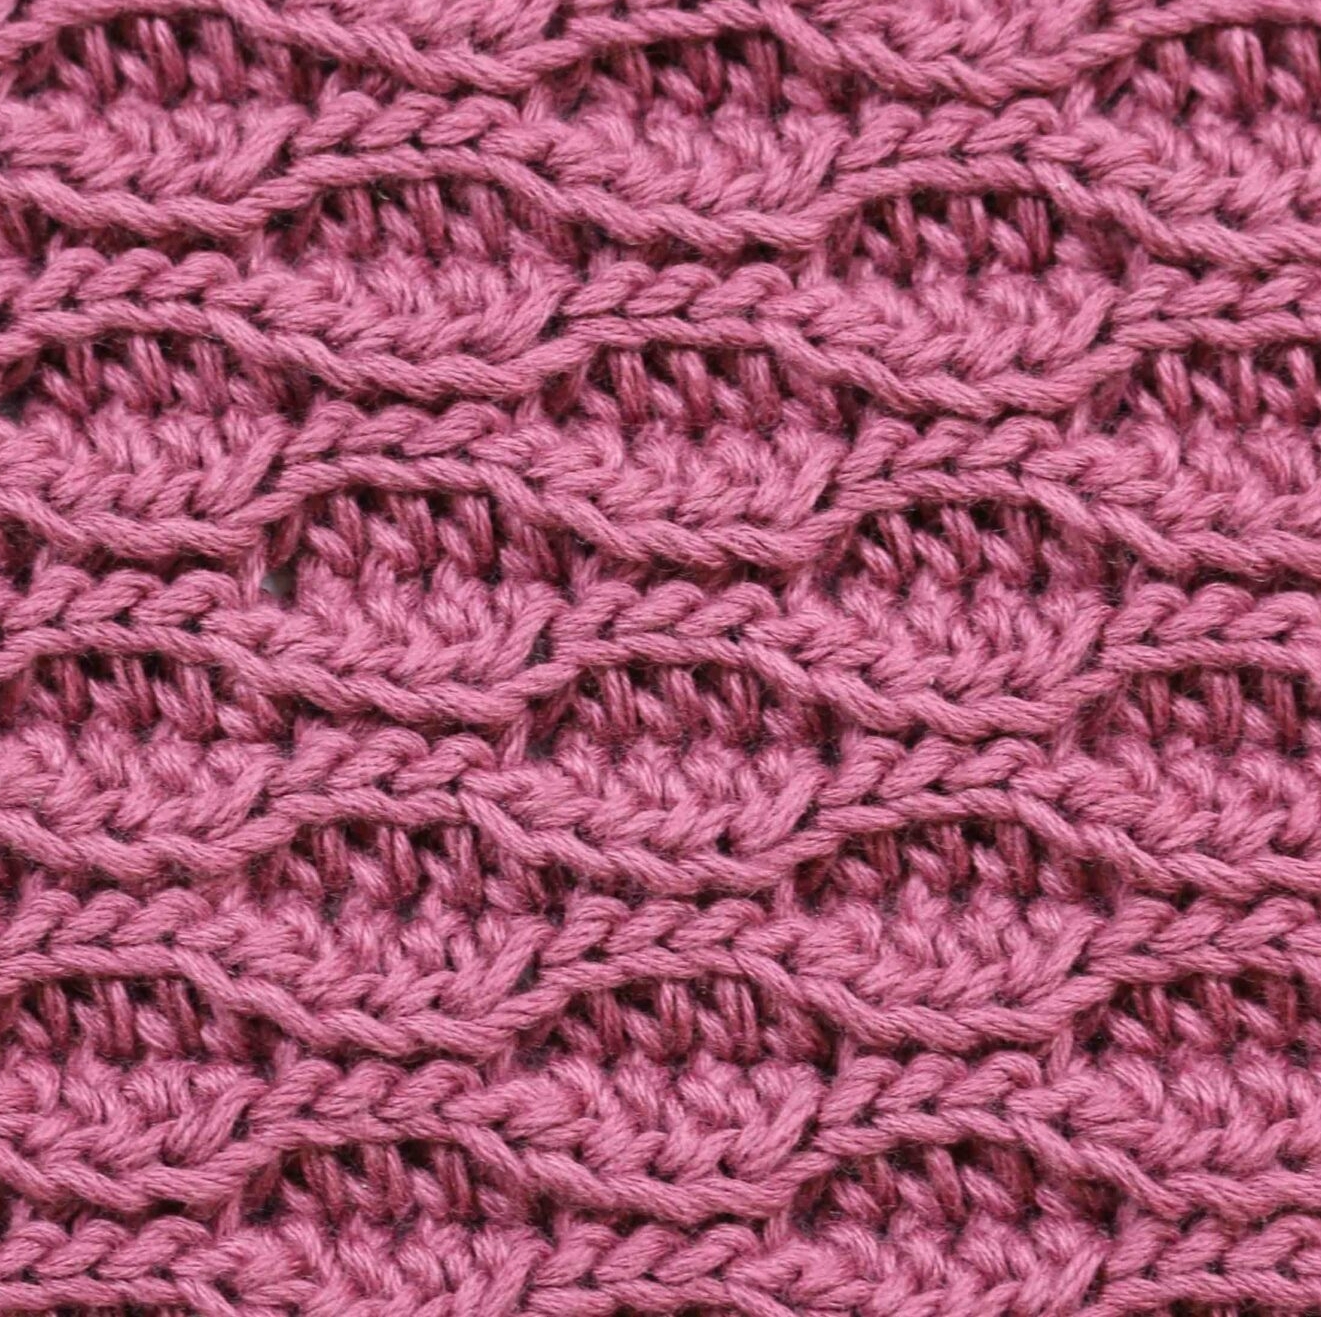 almond stitch crochet free pattern punto almendra patron gratis ganchillo